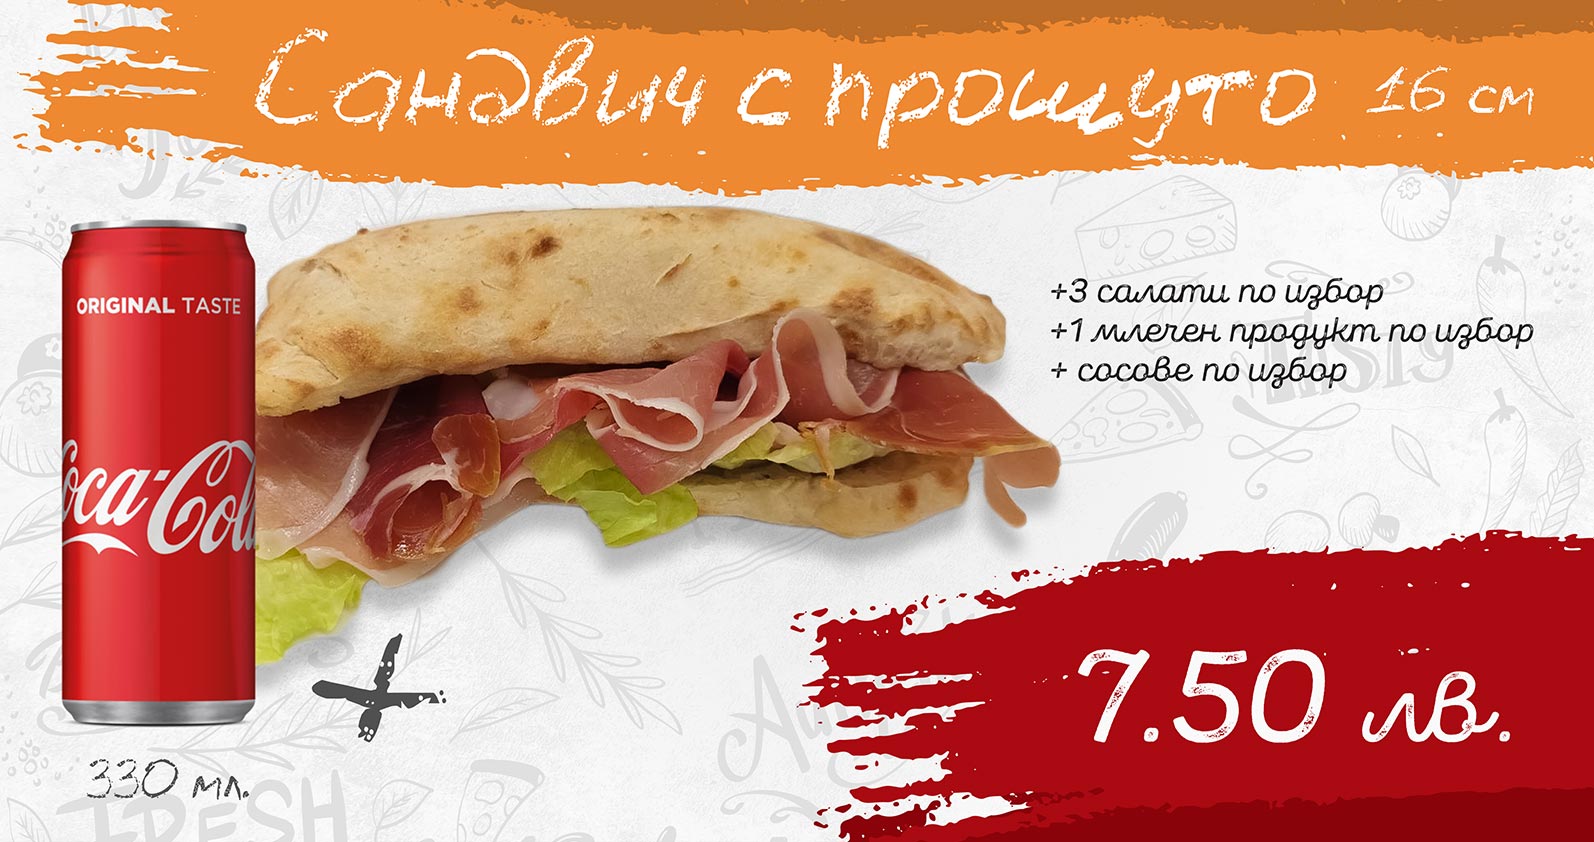 Сандвич с прошуто 16 см. + Coca-Cola 330 мл.